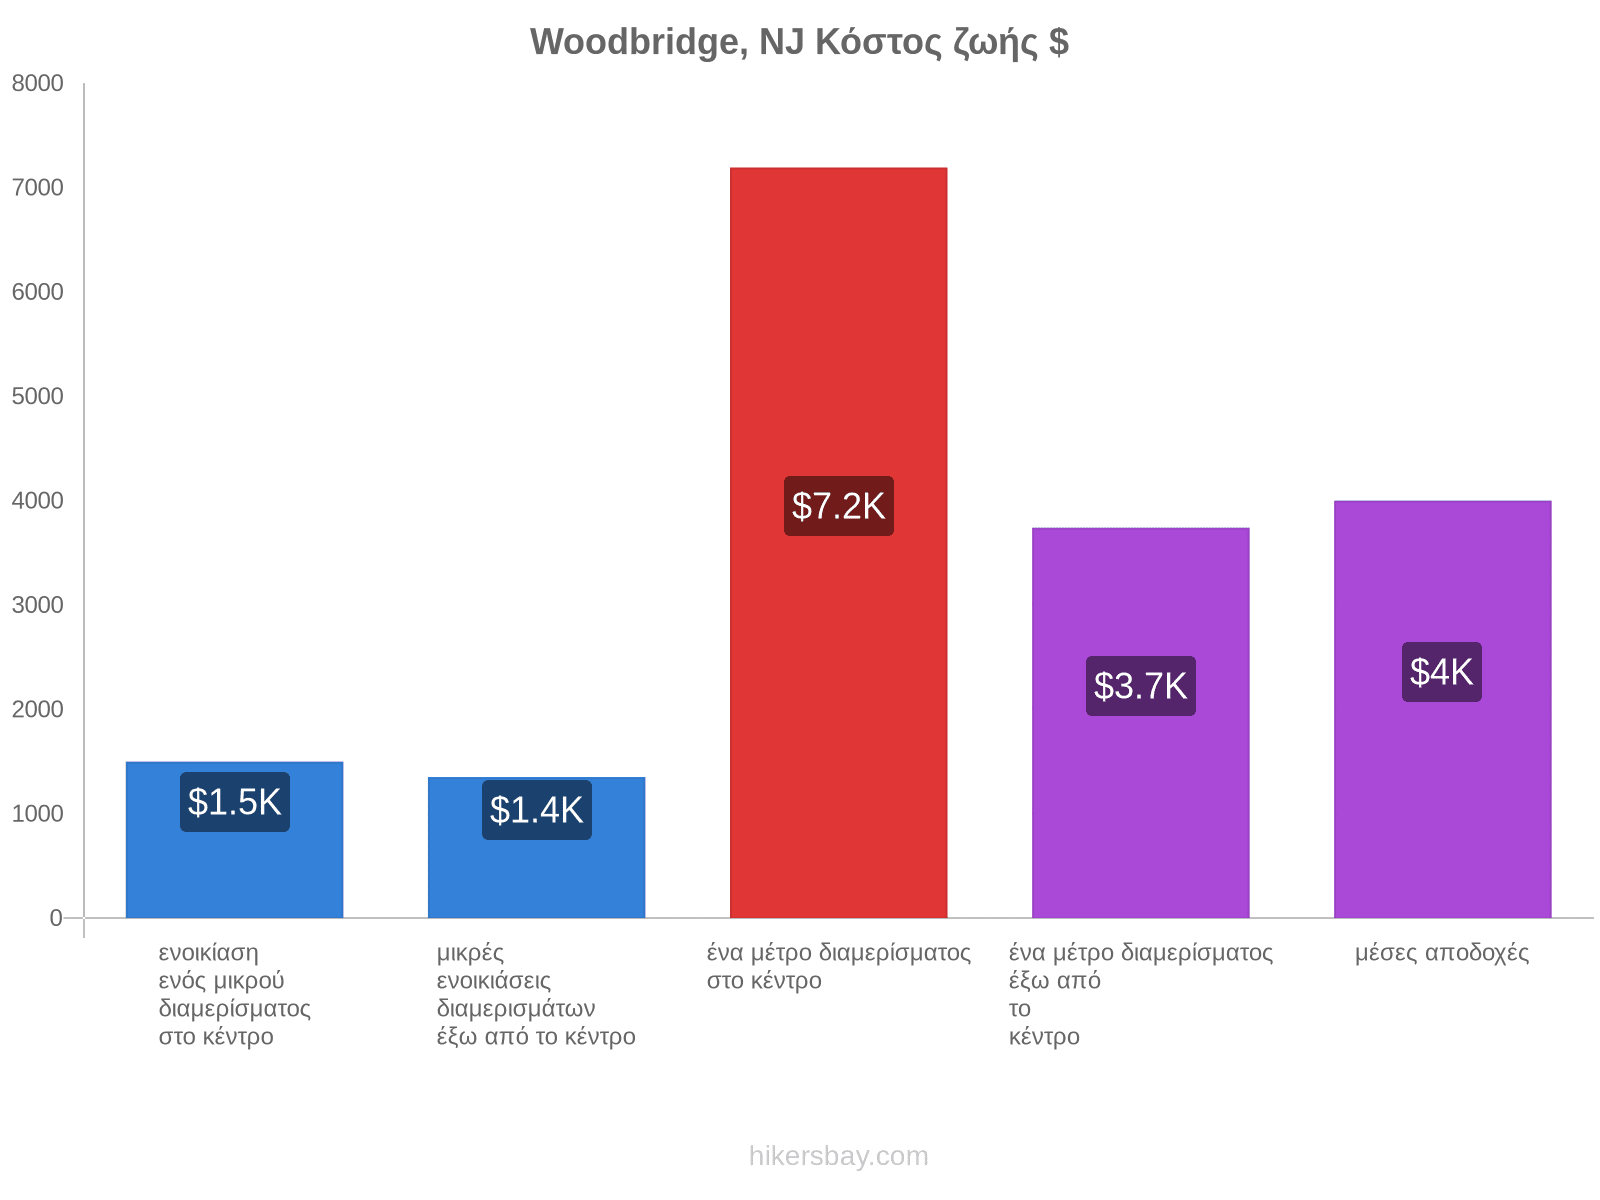 Woodbridge, NJ κόστος ζωής hikersbay.com